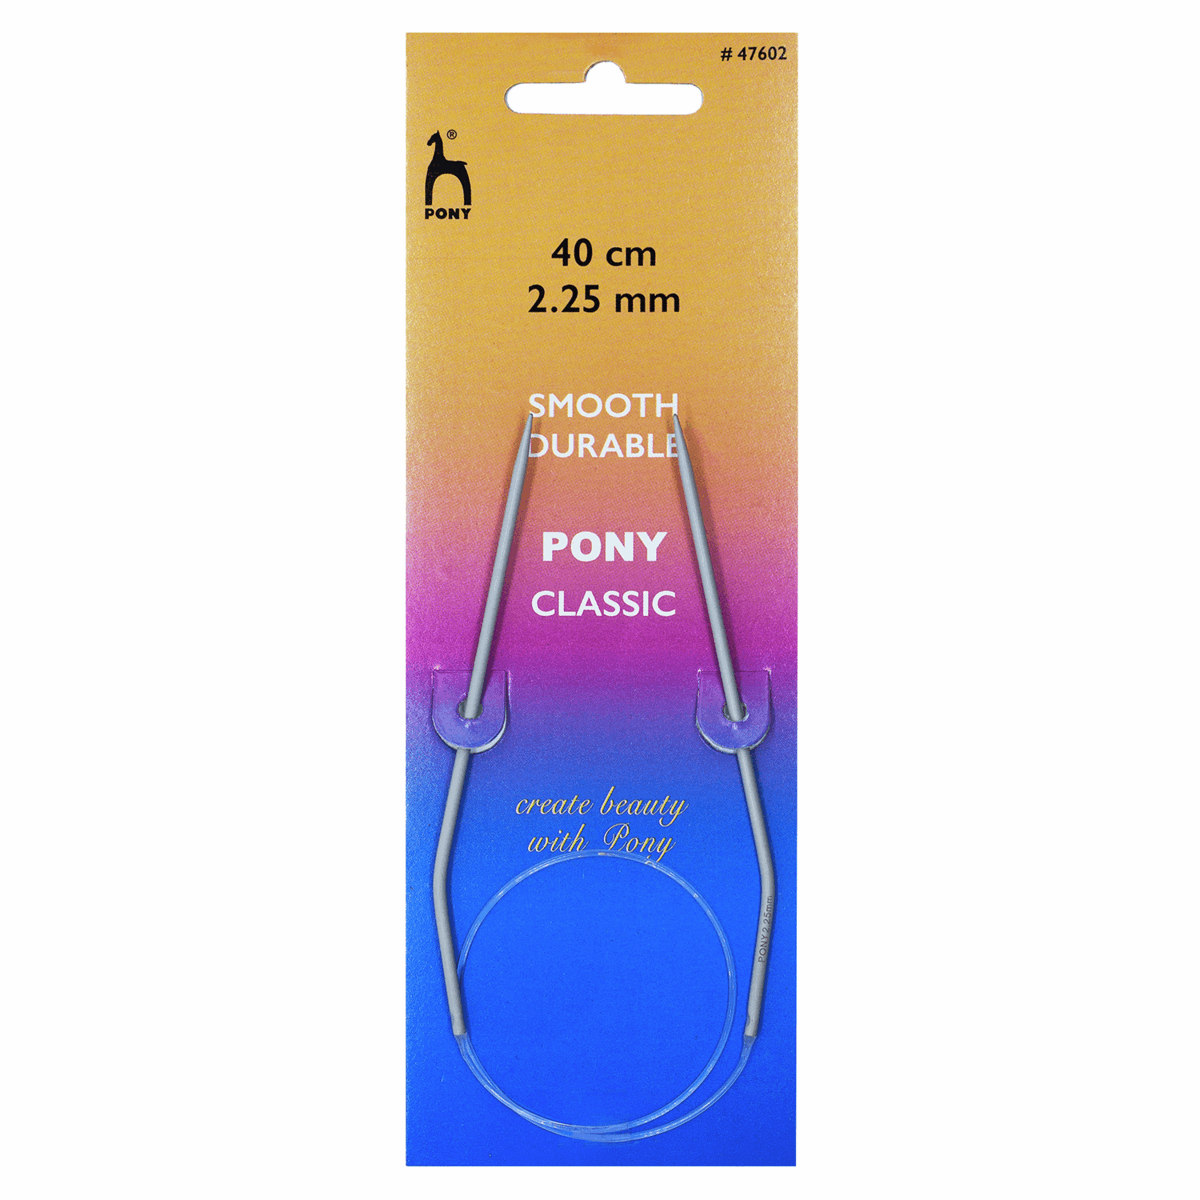 PONY Classic Circular Fixed Knitting Pins - 40cm x 2.25mm